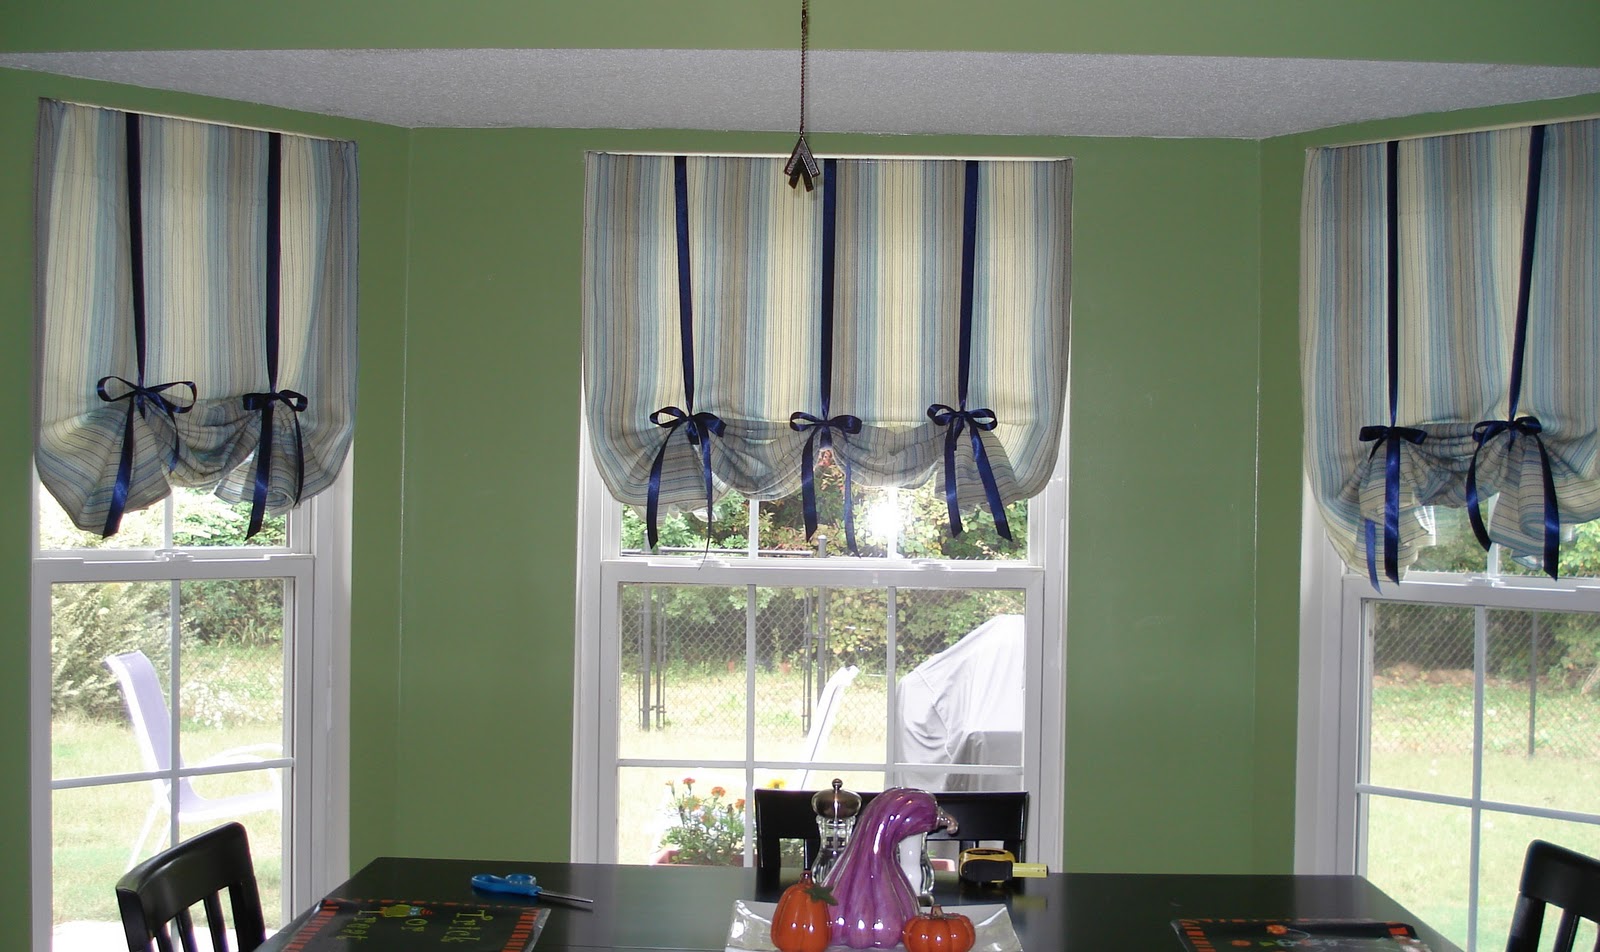 kitchen drape ideas pictures on modern menage Kitchen Curtain Ideas Pictures